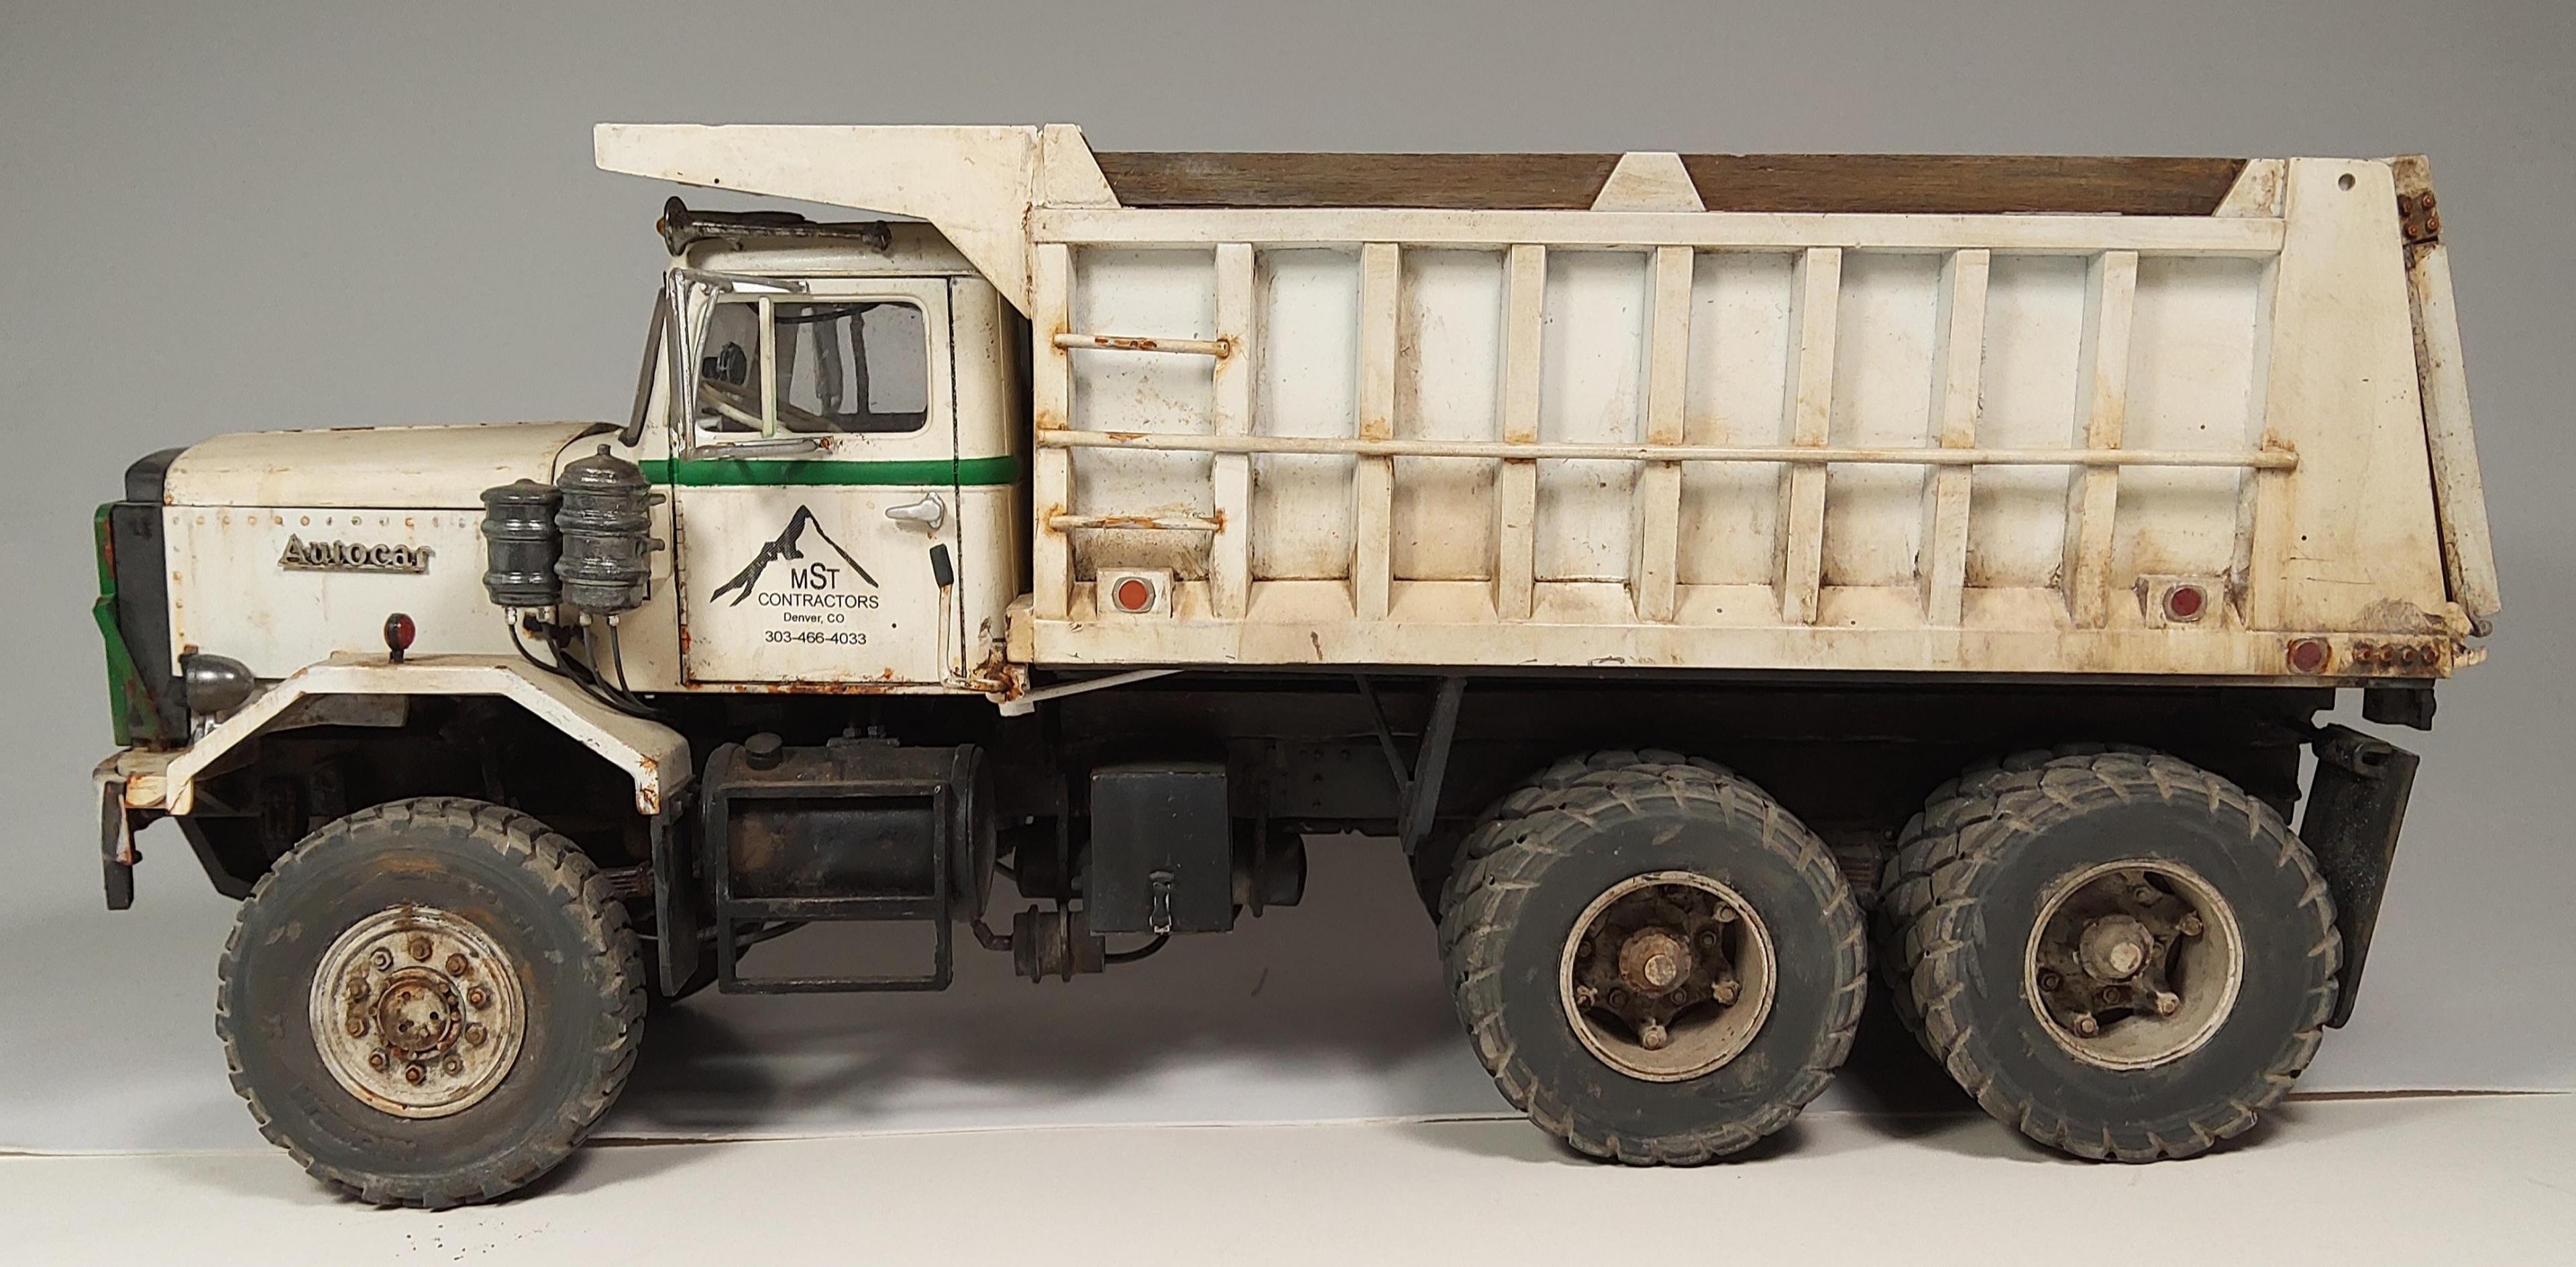 Autocar Dump Truck Model Trucks Big Rigs And Heavy Equipment Model ...